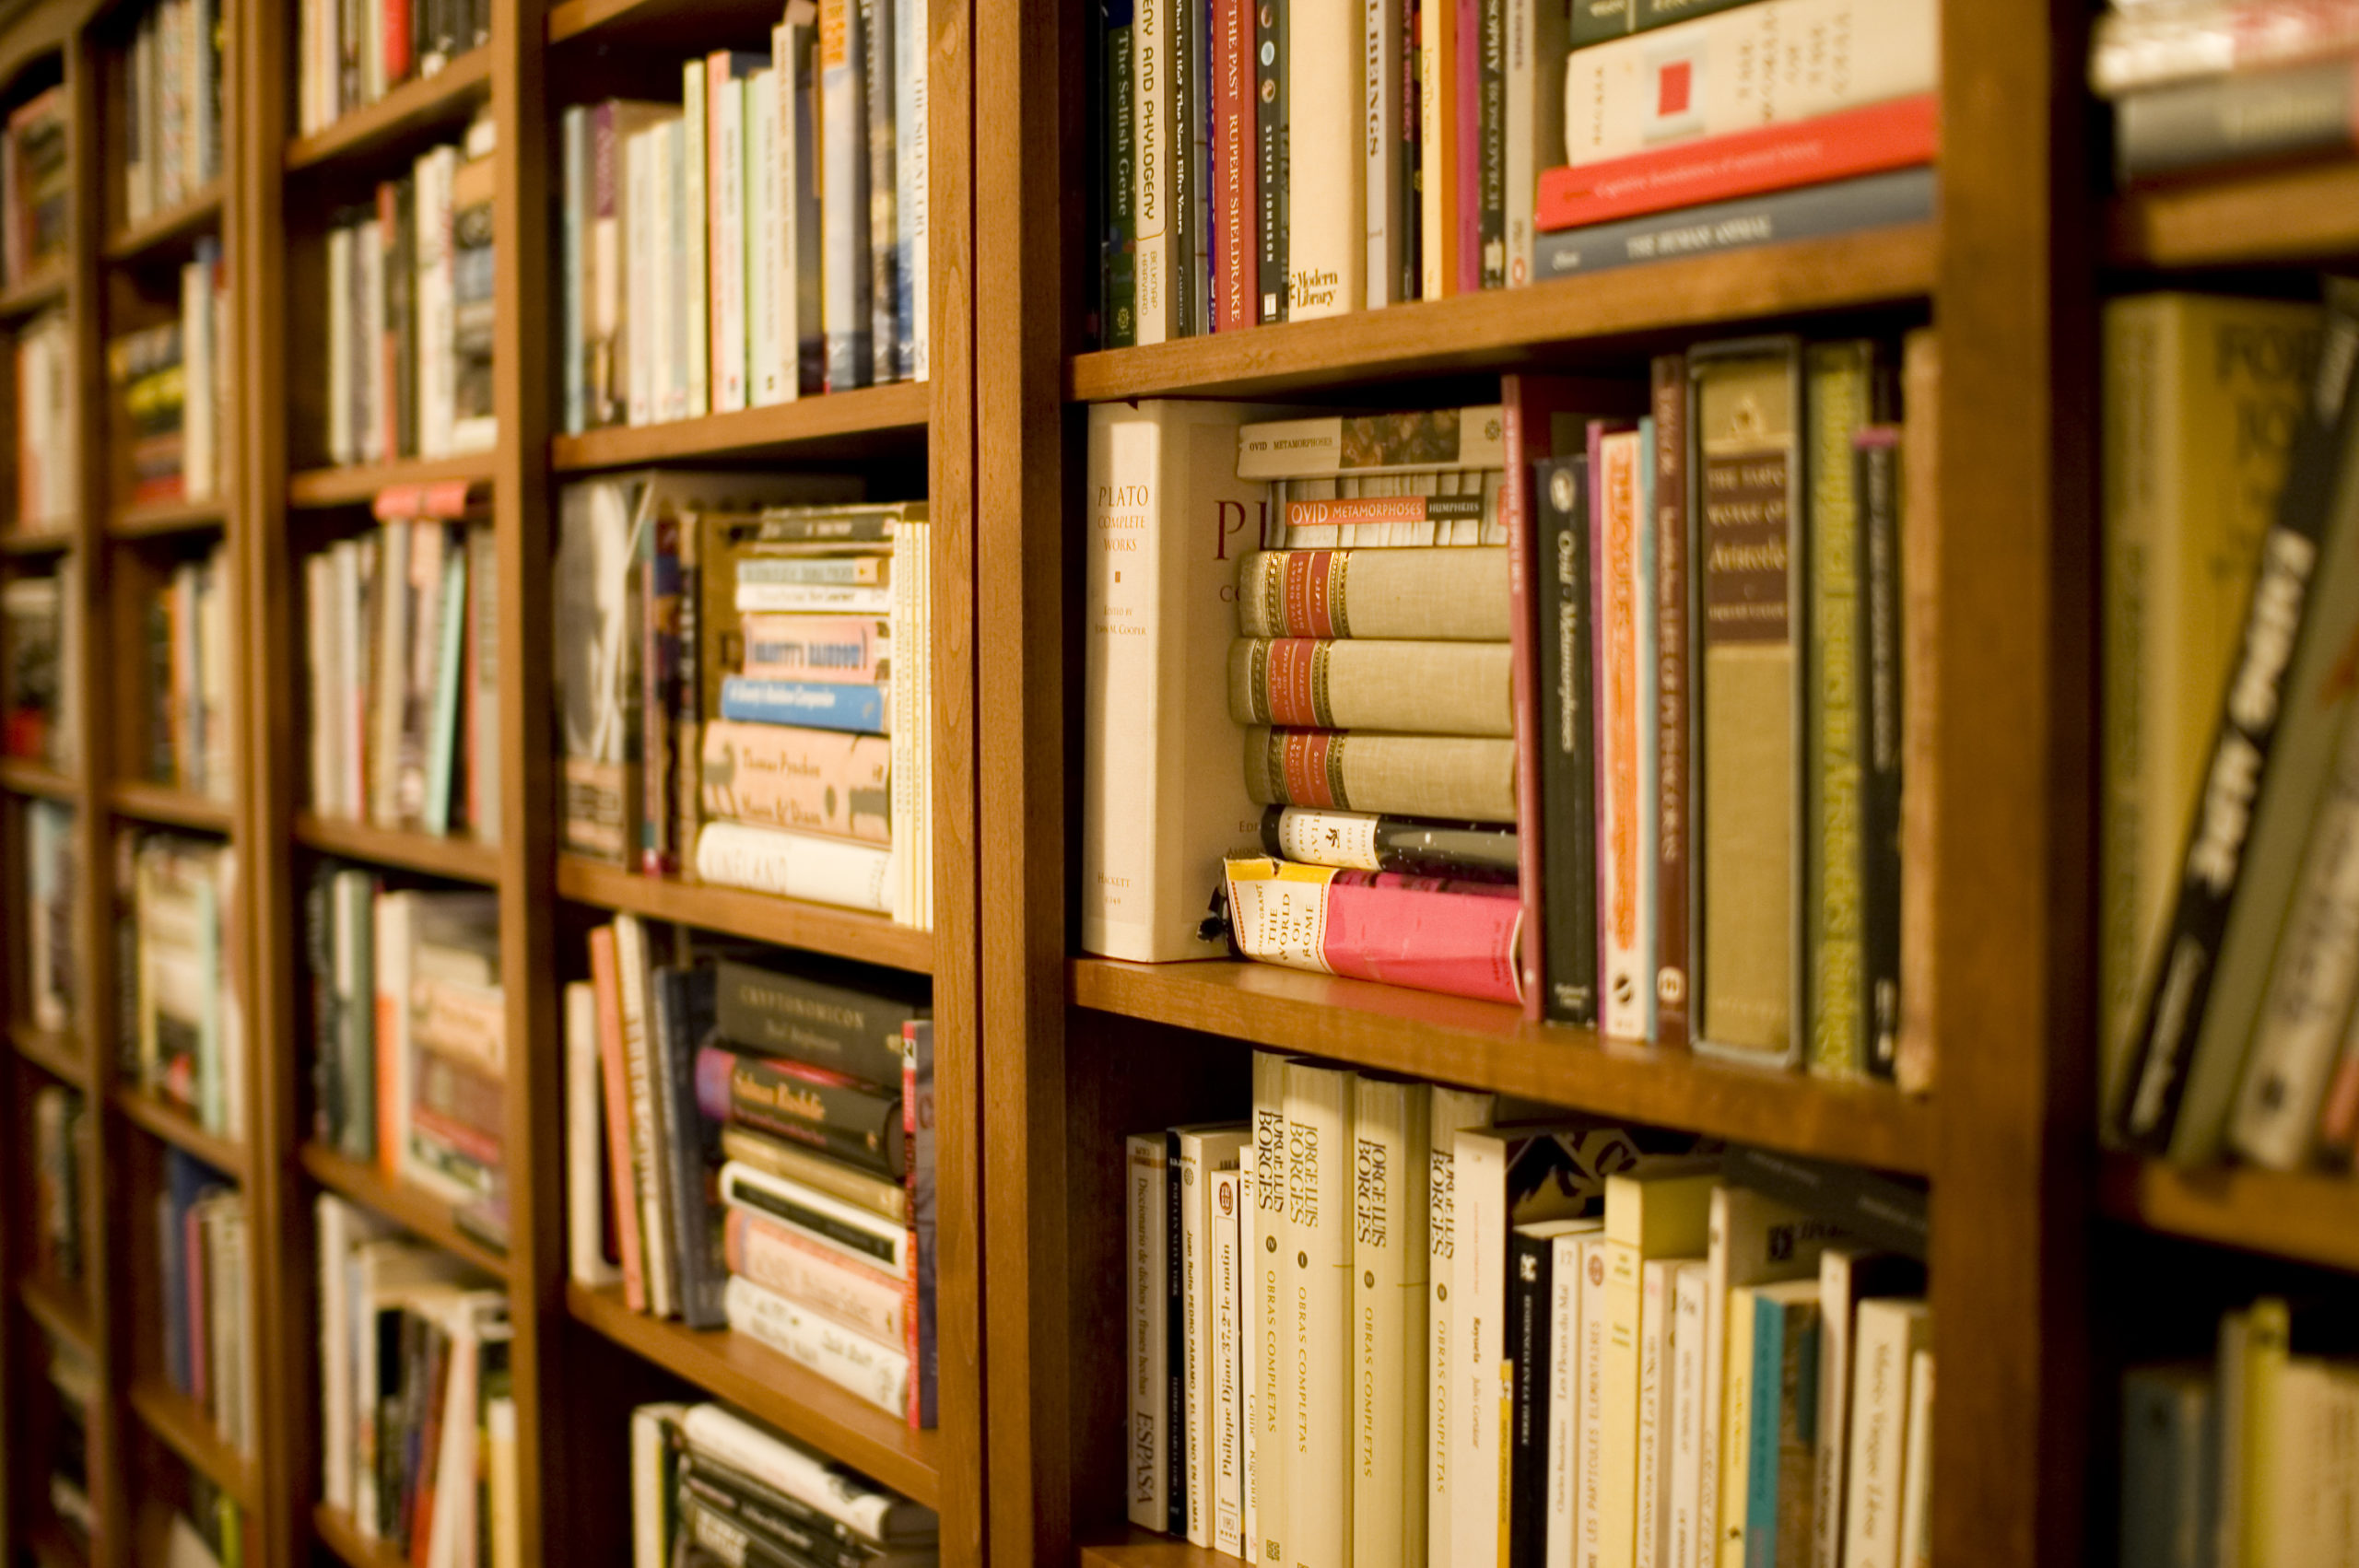 Library books on shelves - Stewart Butterfield